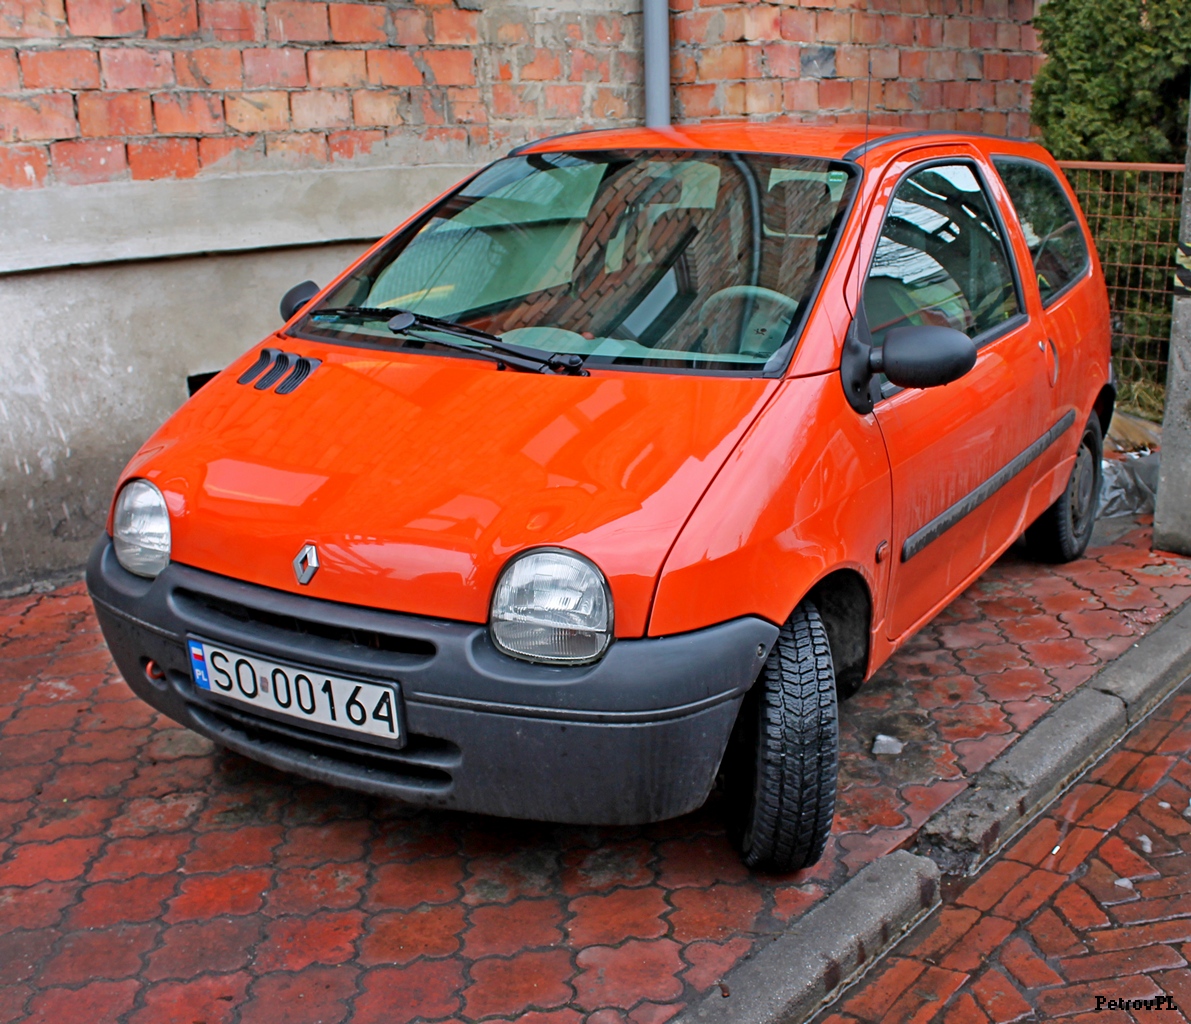 Renault продали. Рено Твинго. Рено Твинго 1. Renault, модель: Twingo 2001. Рено Твинго 4 ВД.